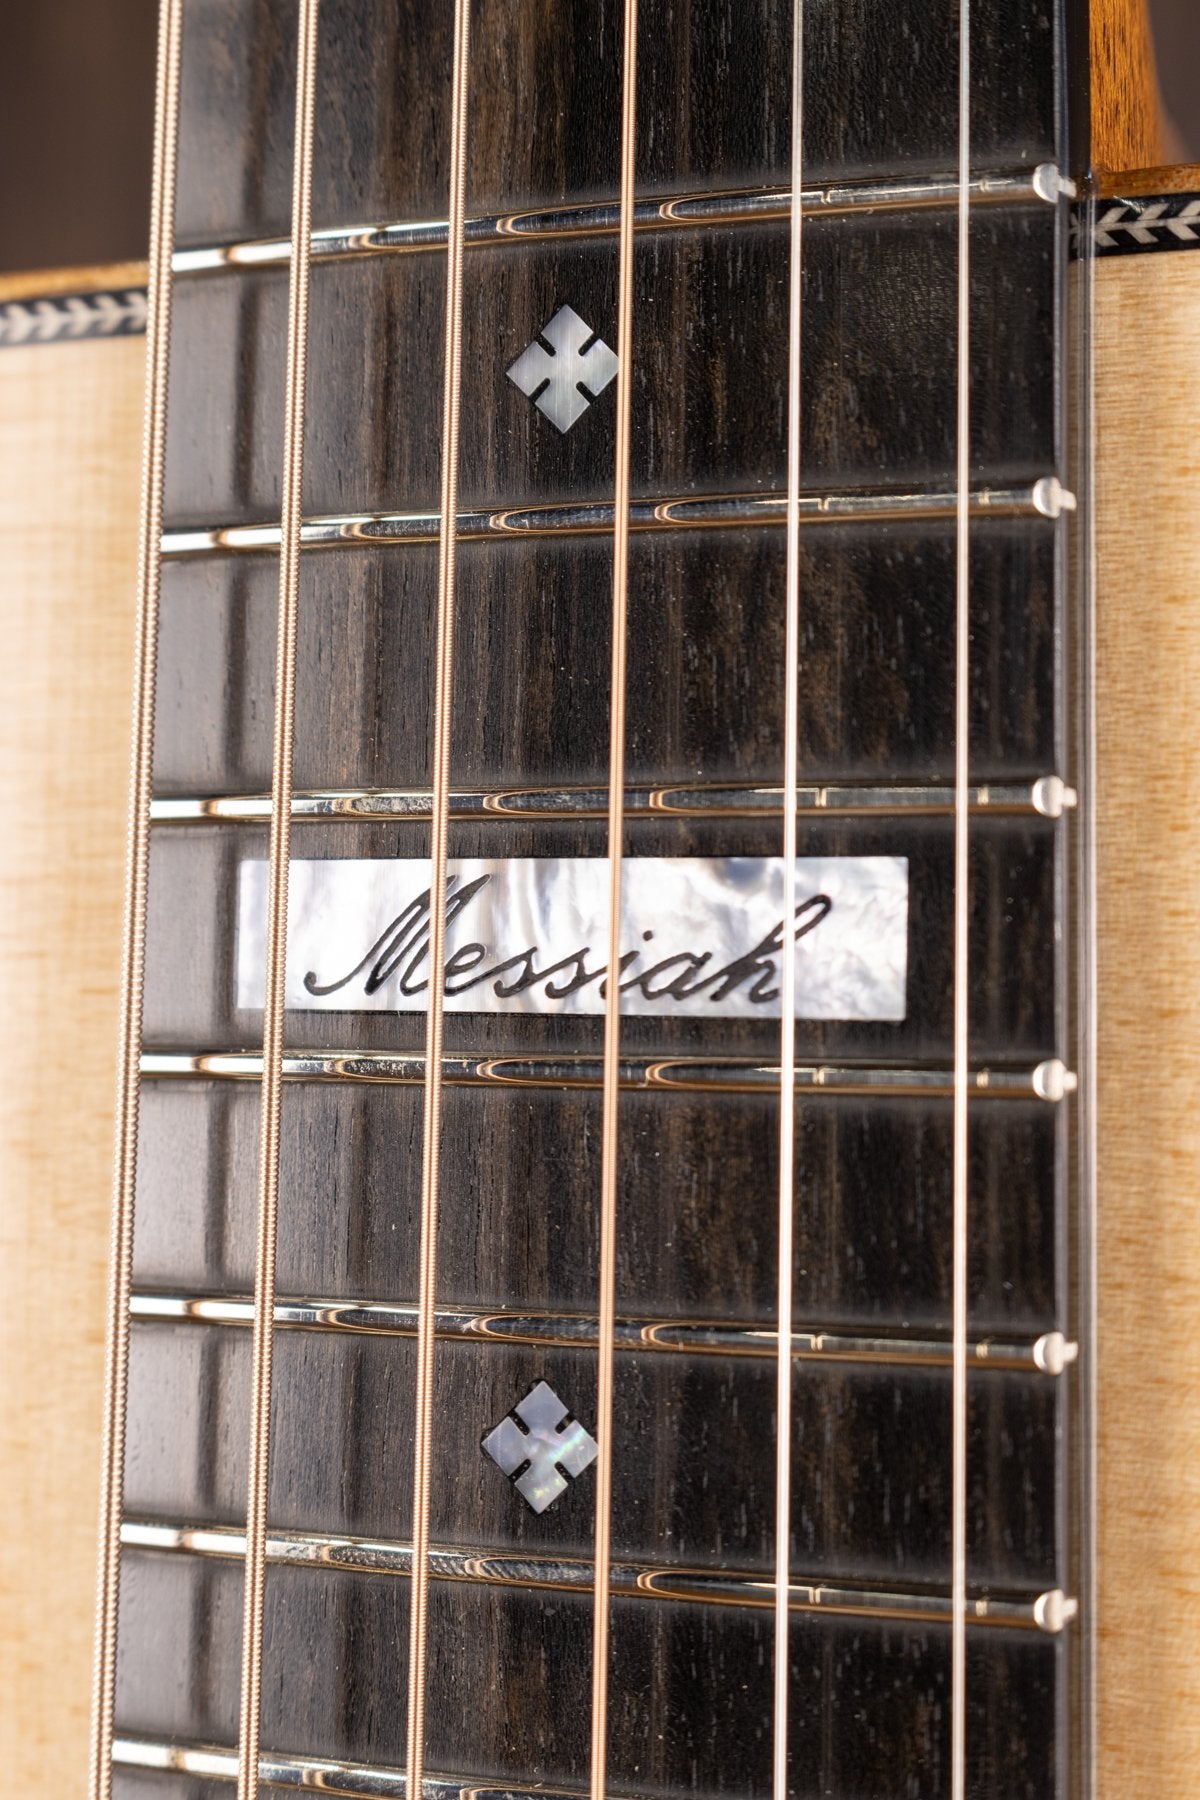 Maton Guitars EM100C 808 Messiah - 14871 - Artisan Guitars